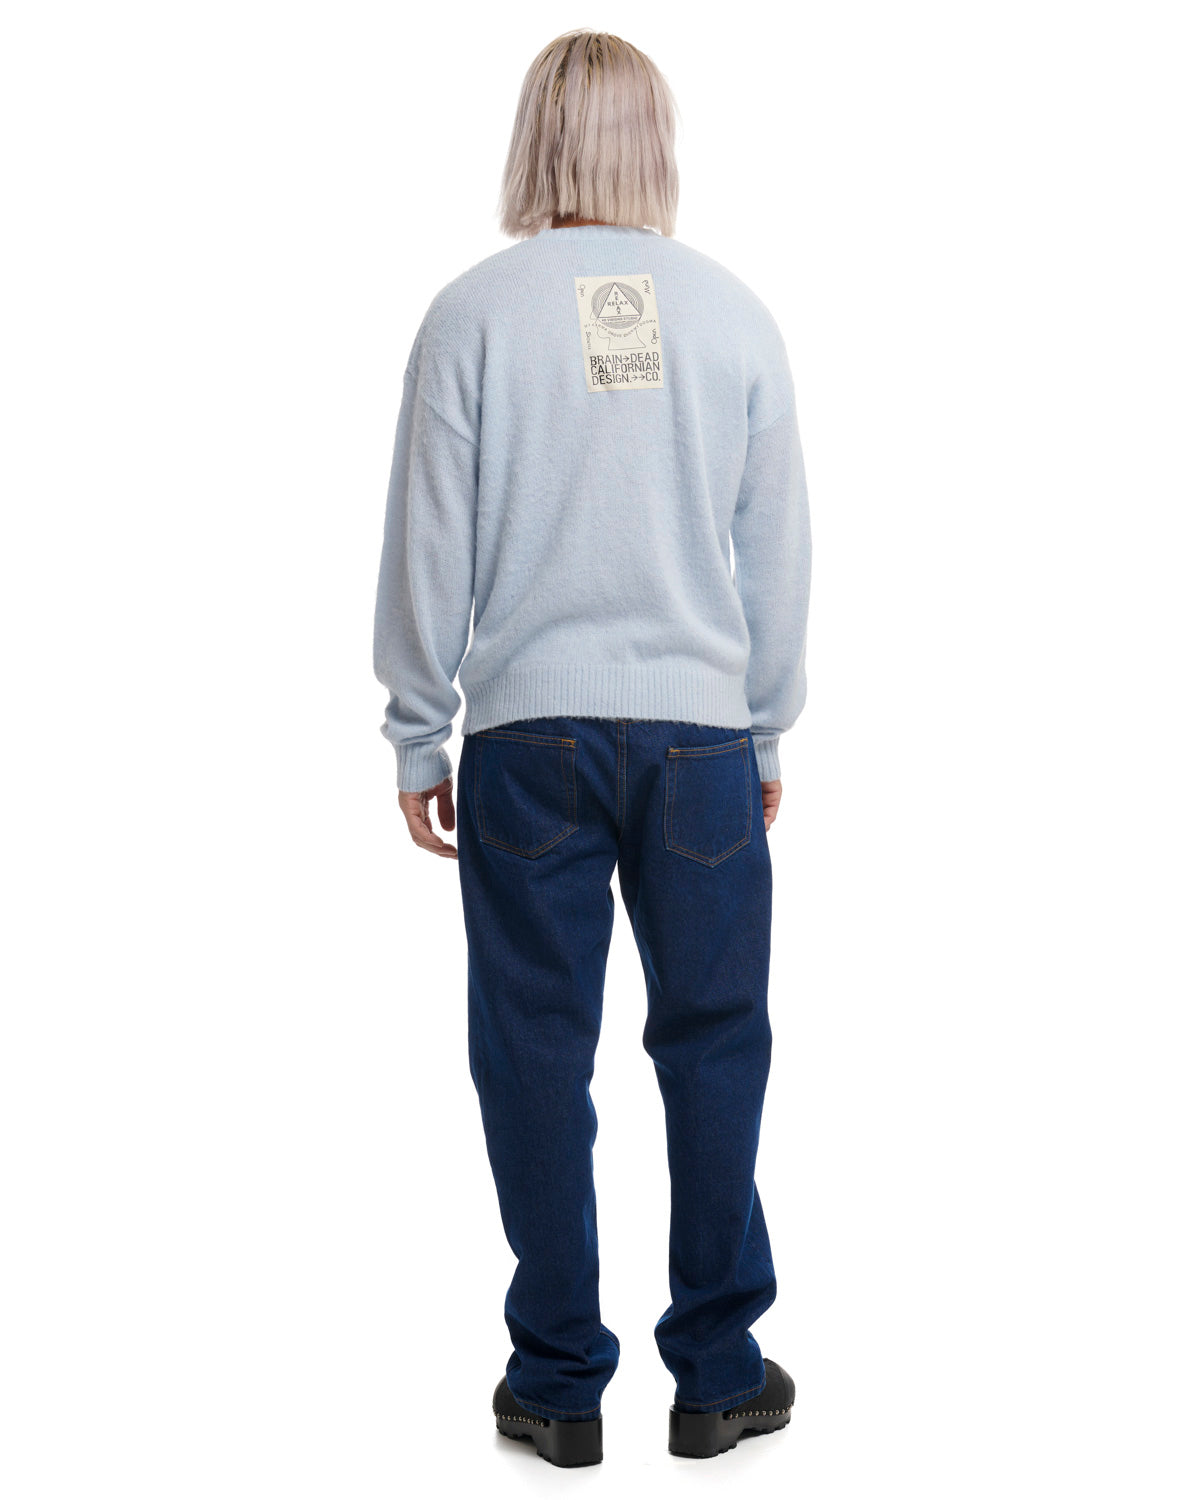 Superfuzz Logohead Crewneck Sweater - Sky Blue – Brain Dead